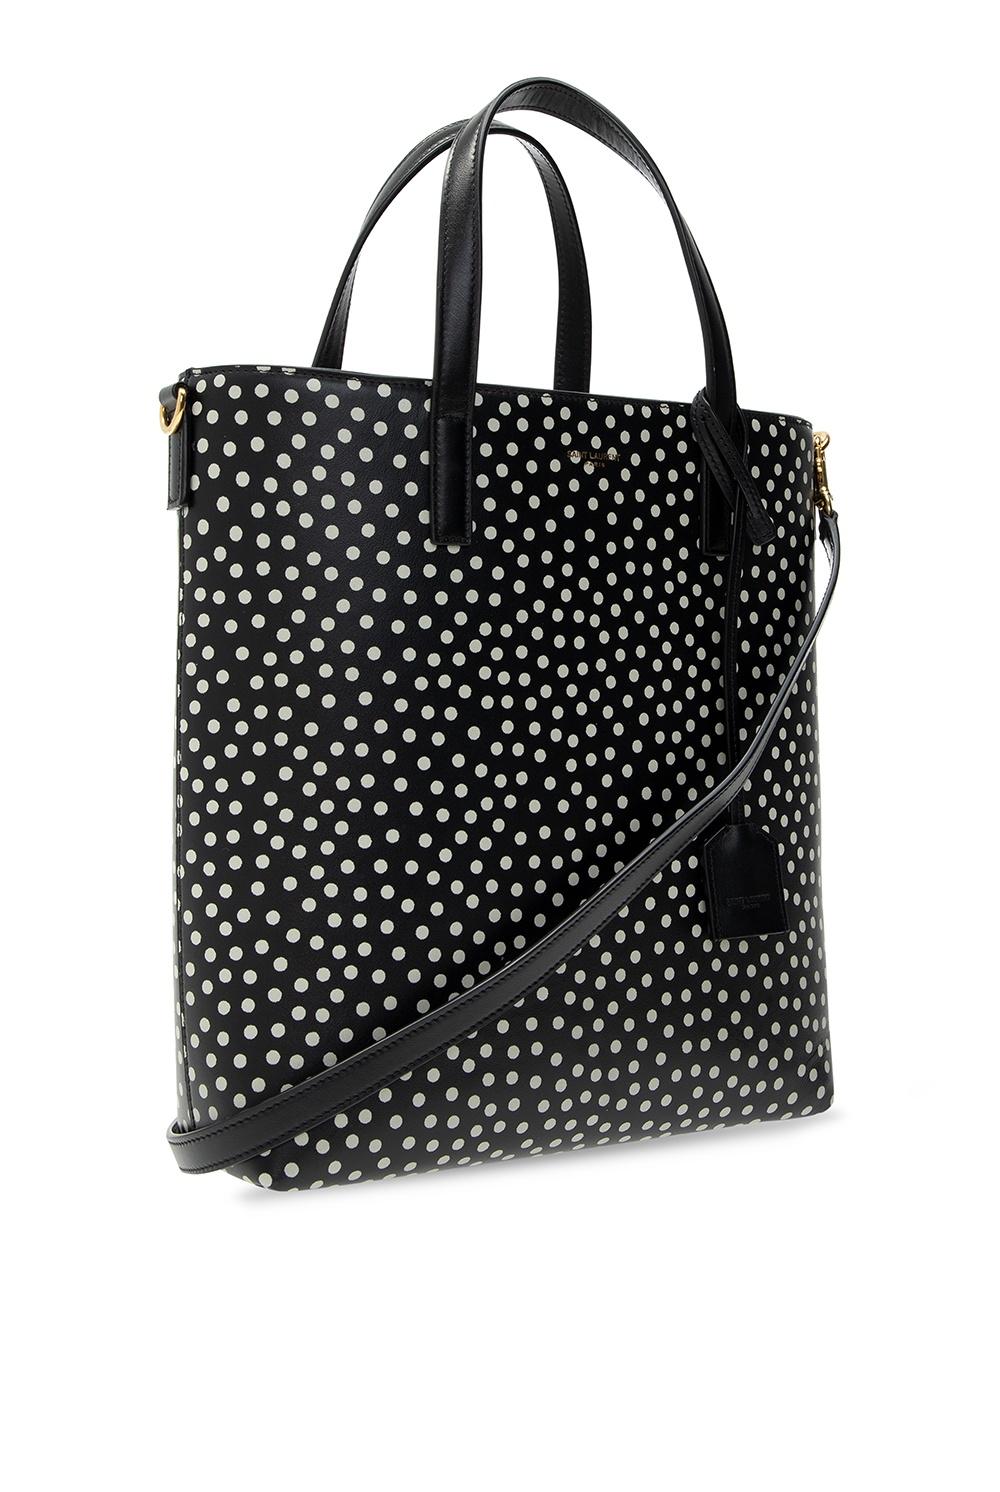 Saint Laurent Soft Leather Black Polka Dot Toy Shopping Bag For Sale 2